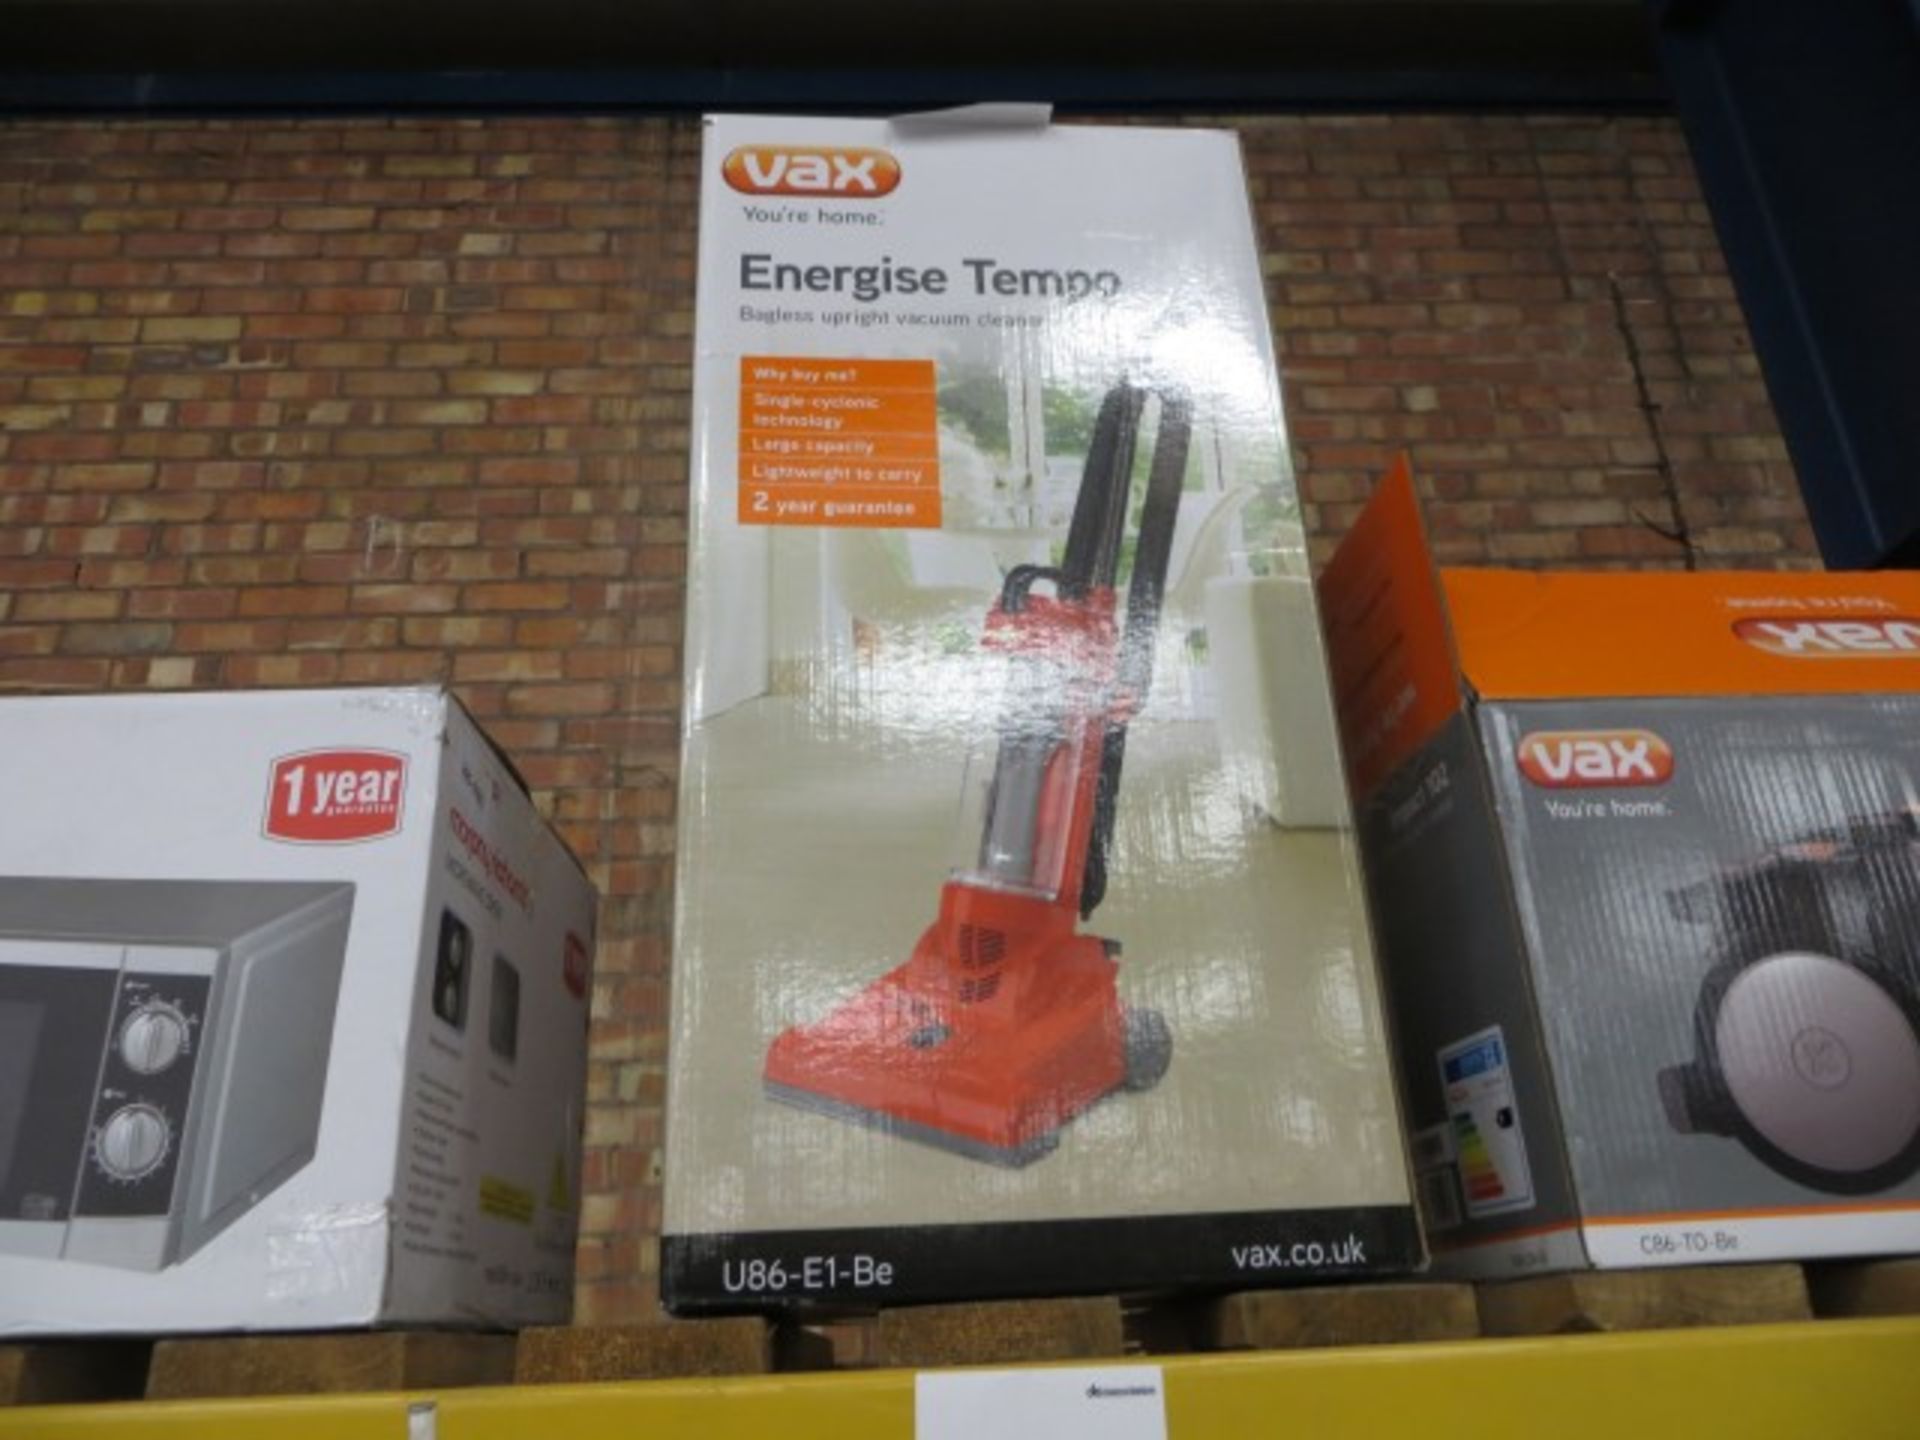 Vax energise tempo upright vacuum cleaner